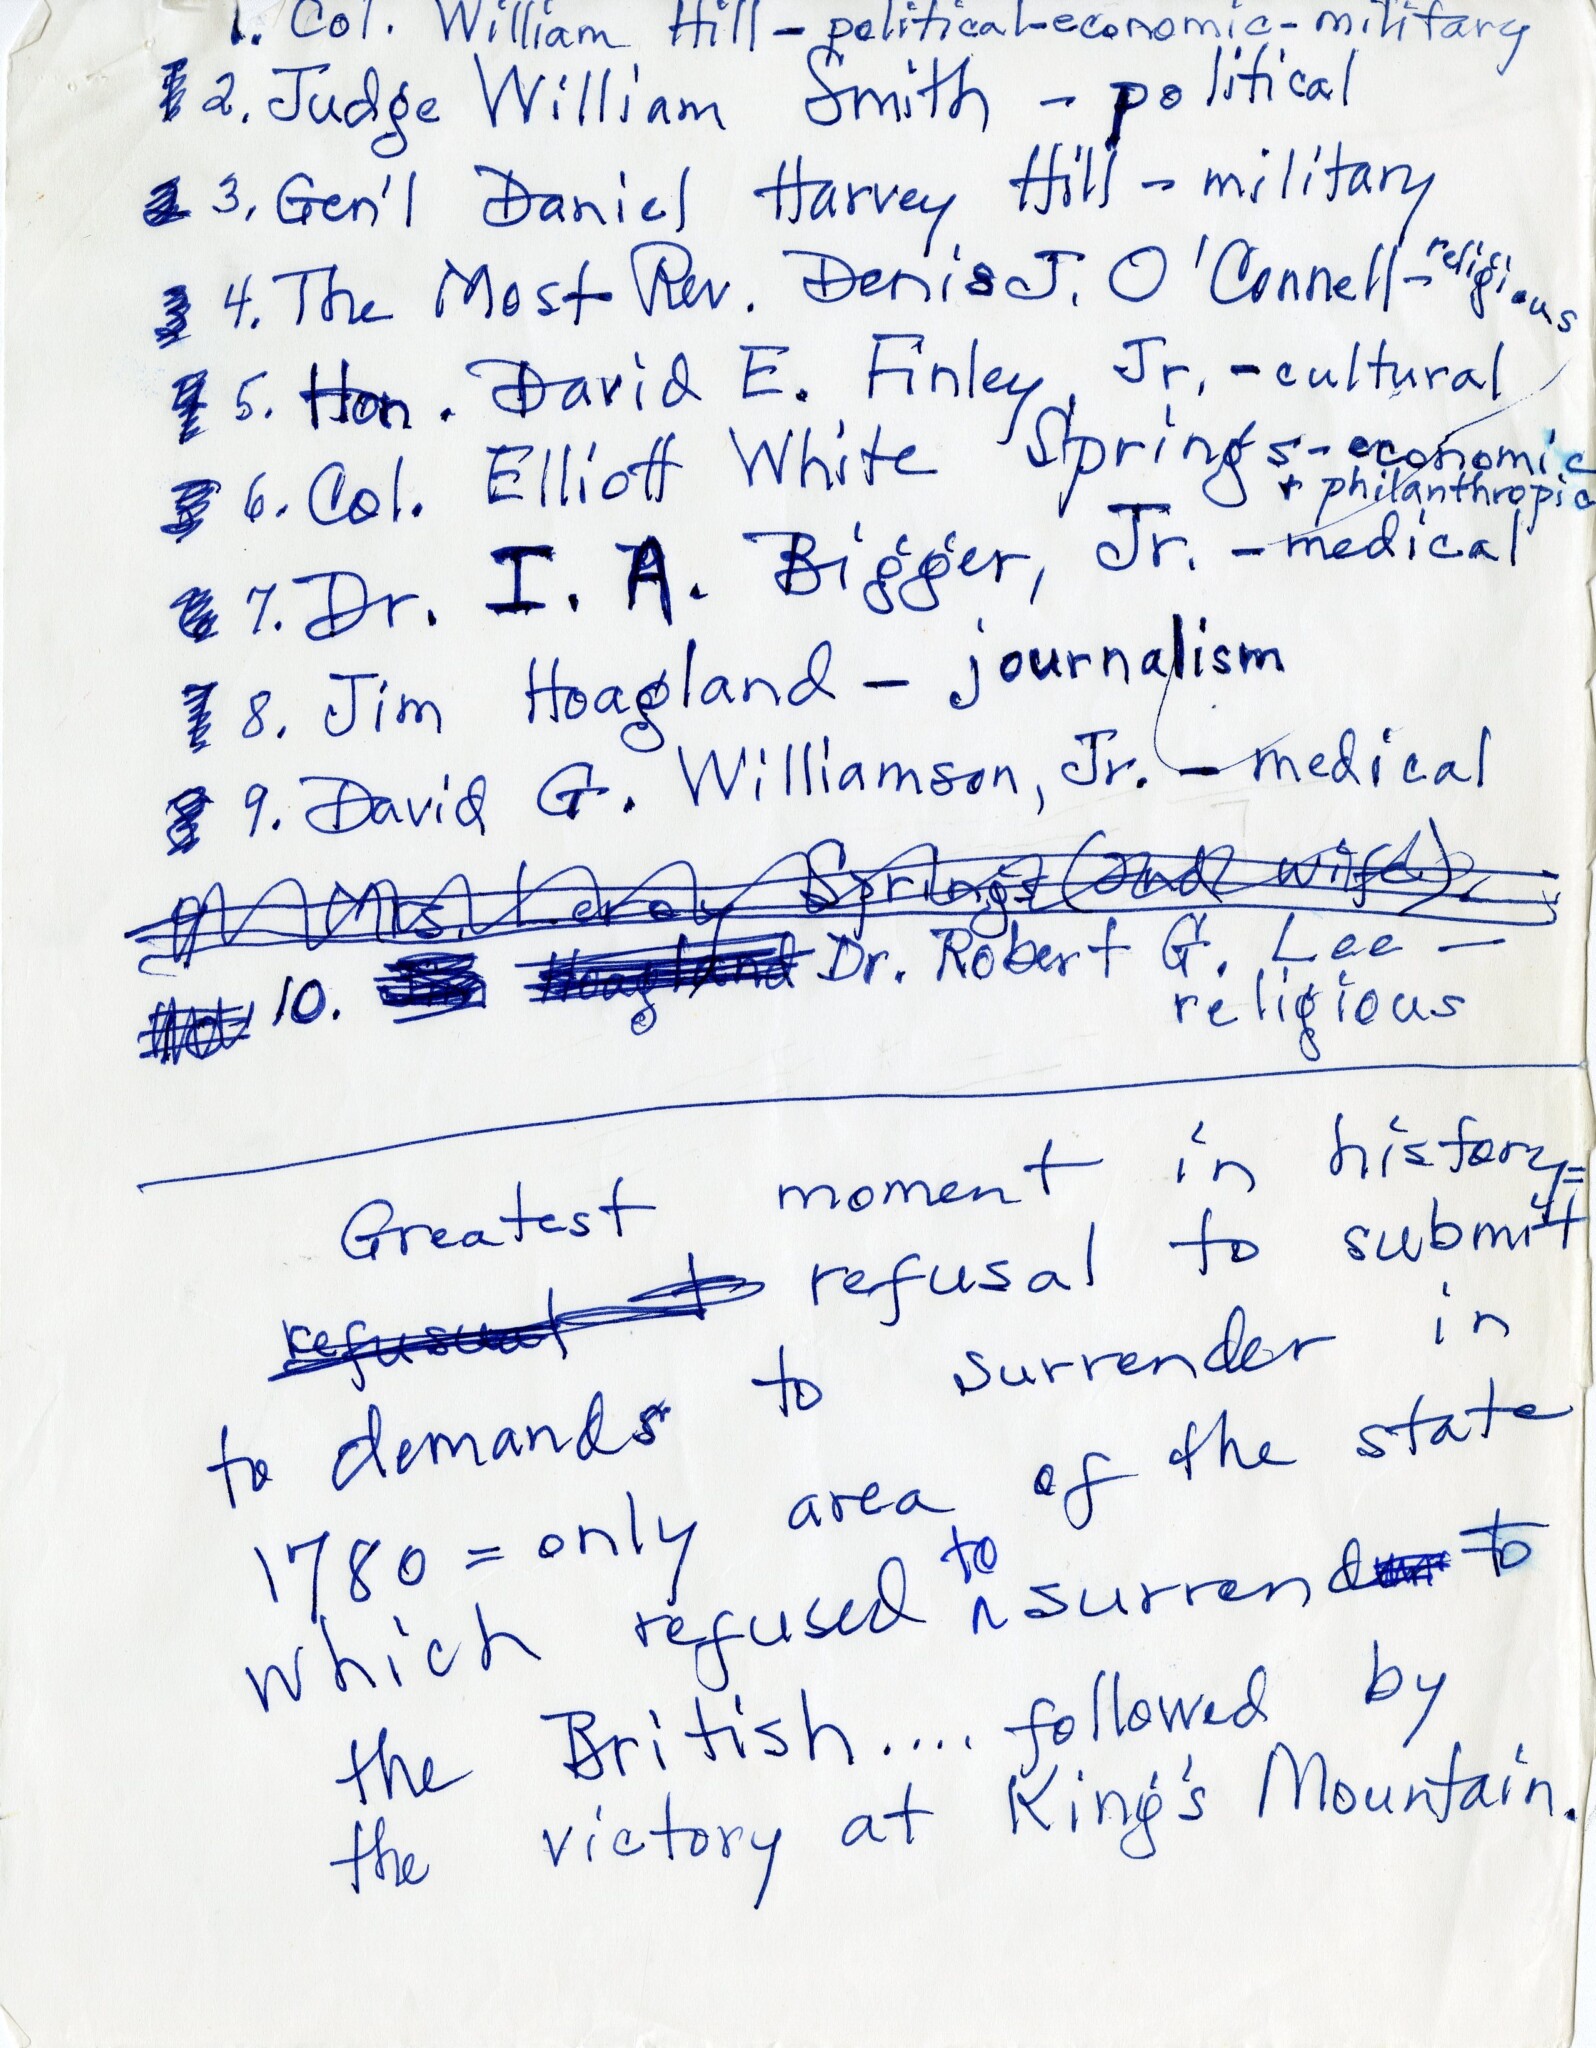 NOTES BY WM. B. WHITE, JR. VIA THE WU PETTIS ARCHIVES